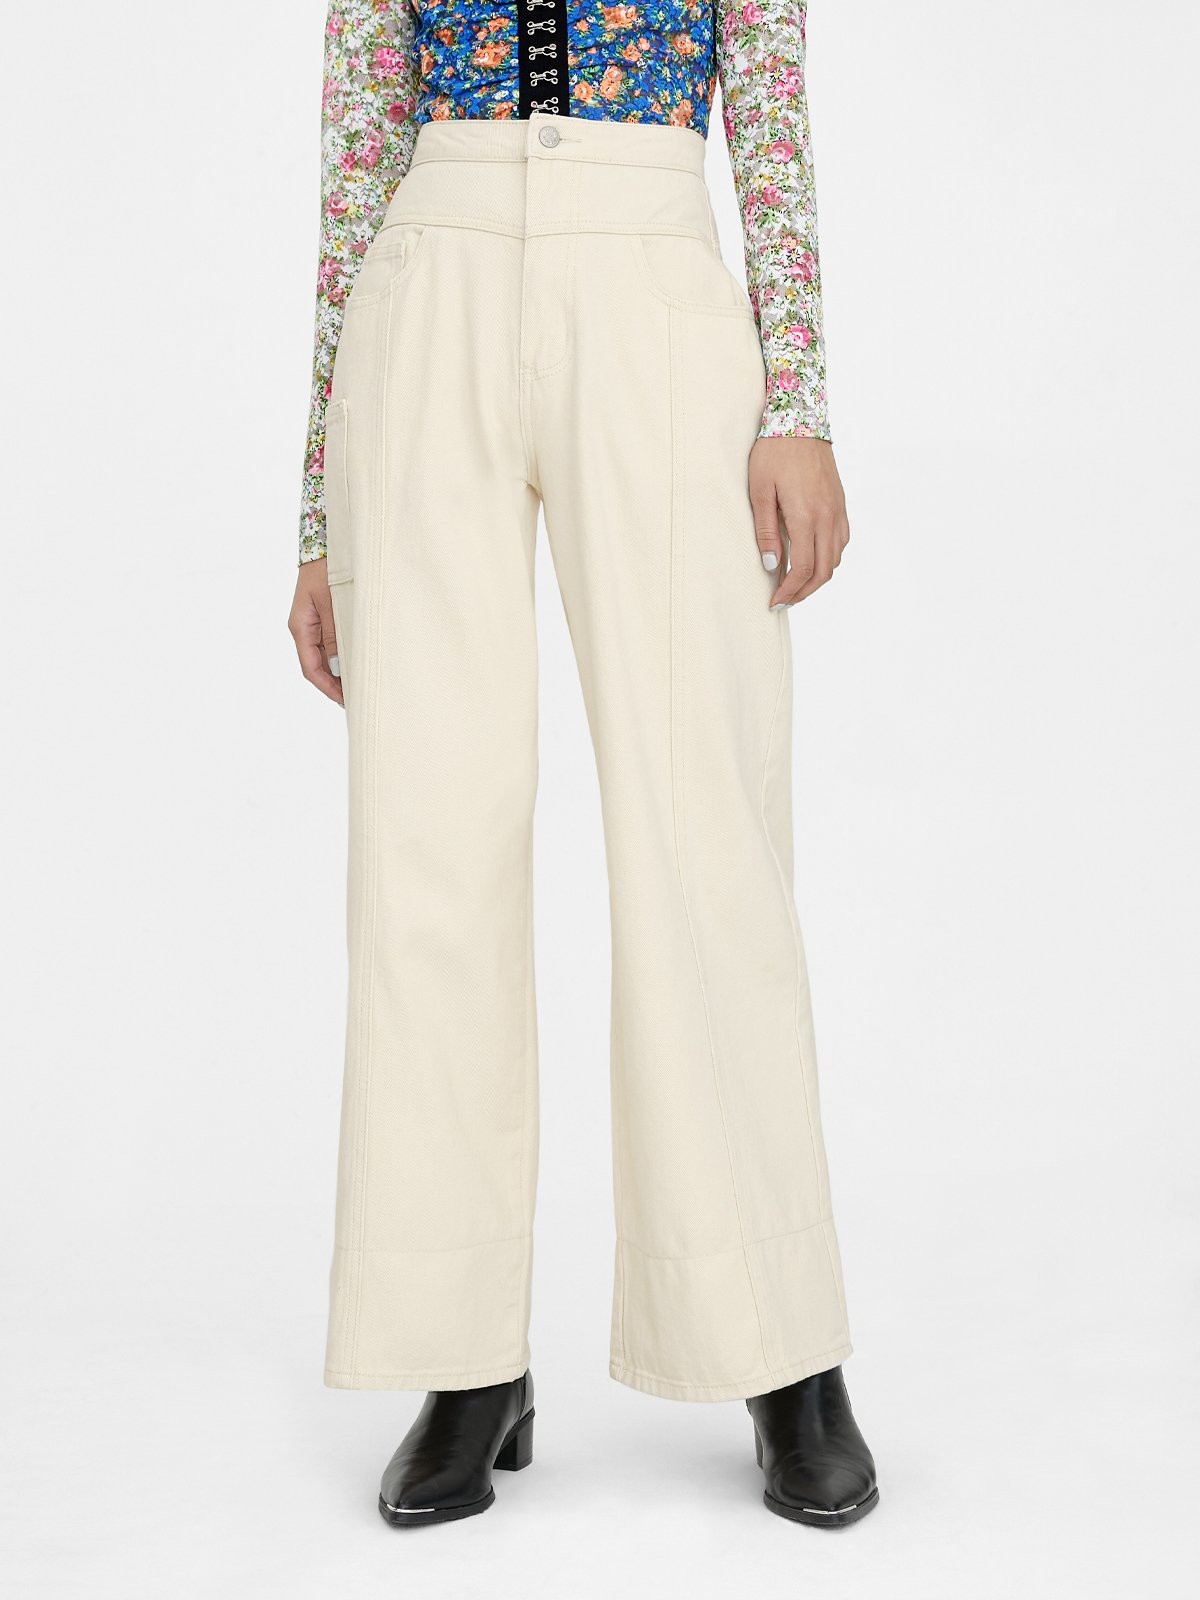 High Waisted Pocket Detail Jeans - Cream - Pomelo Fashion